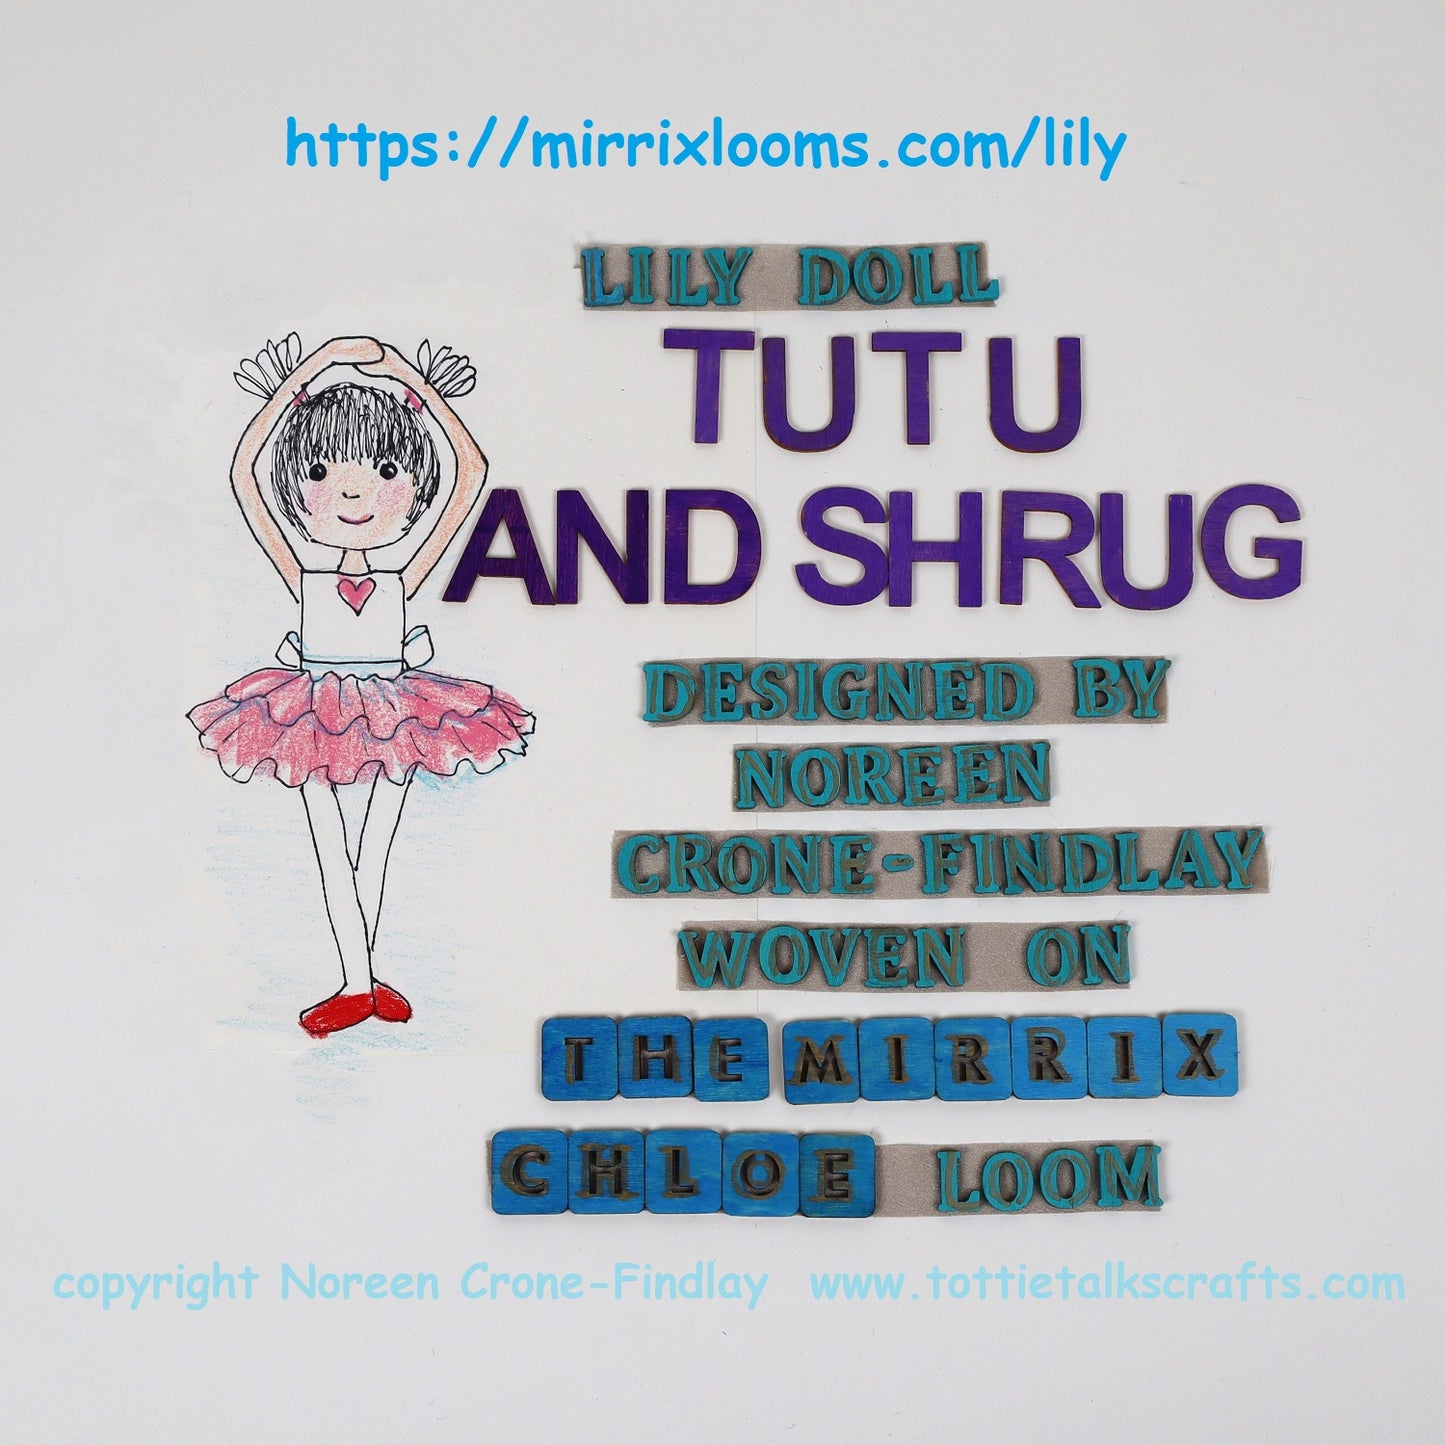 The Lily Doll Tutu and Shrug Kit